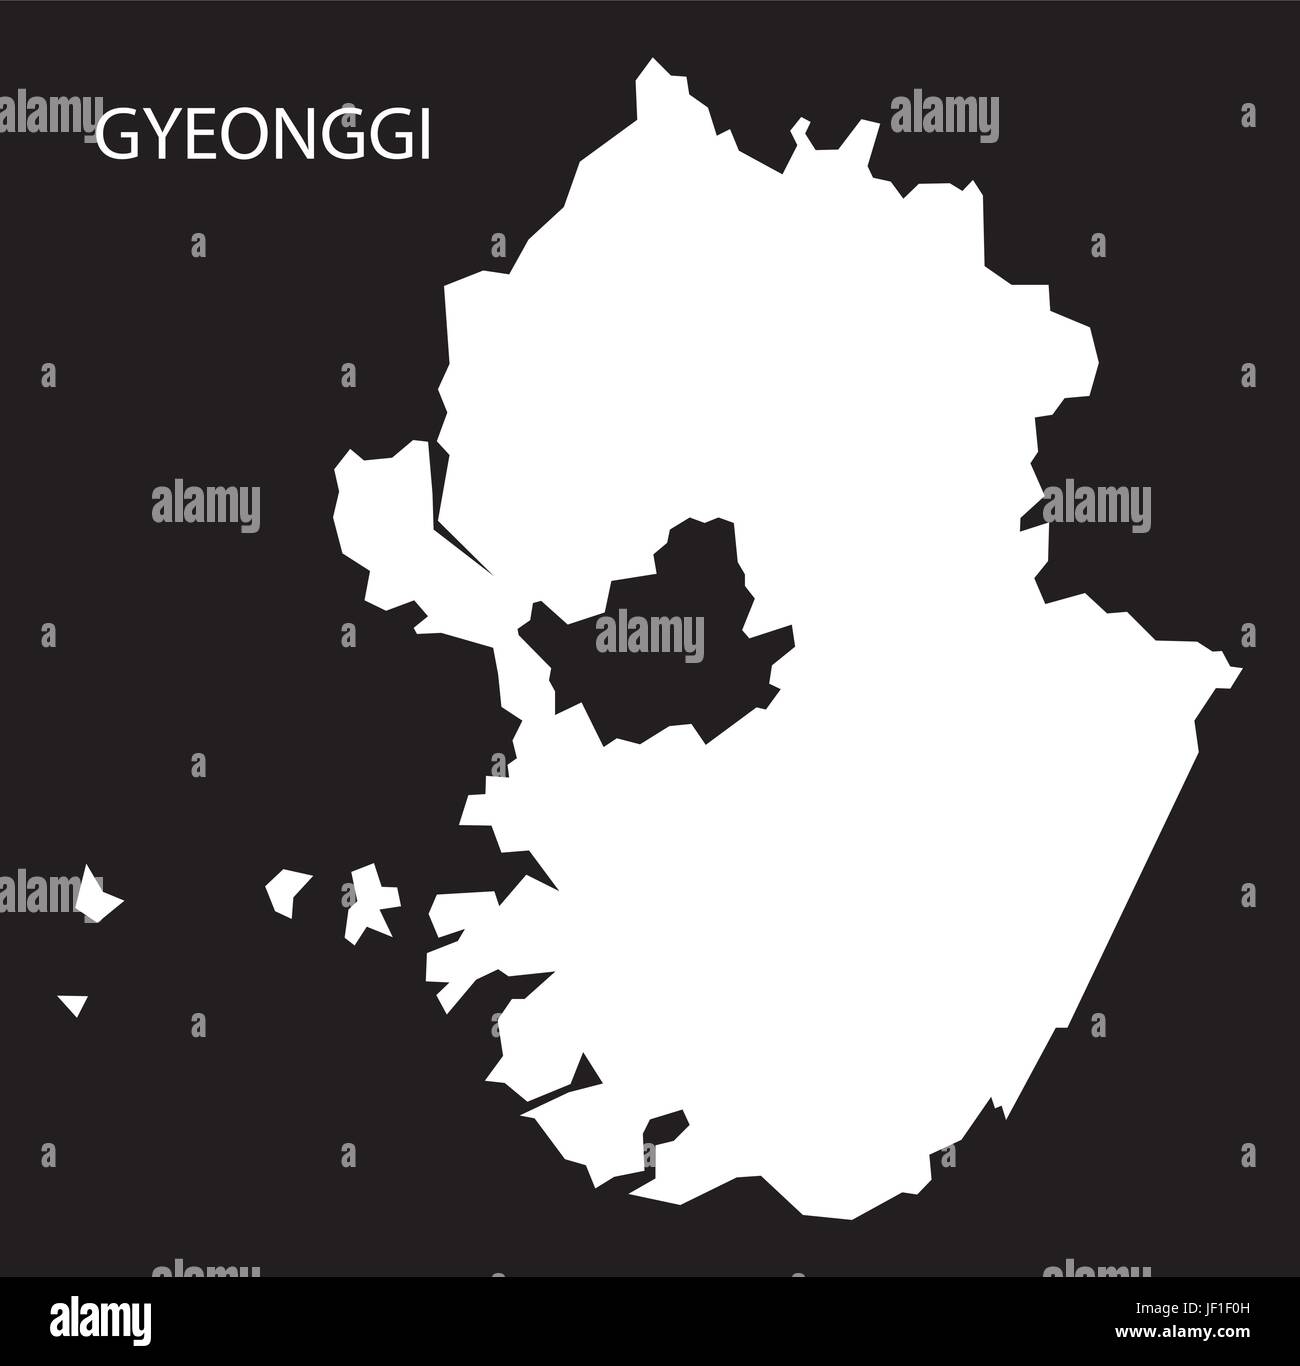 Gyeonggi South Korea map black inverted silhouette illustration Stock Vector